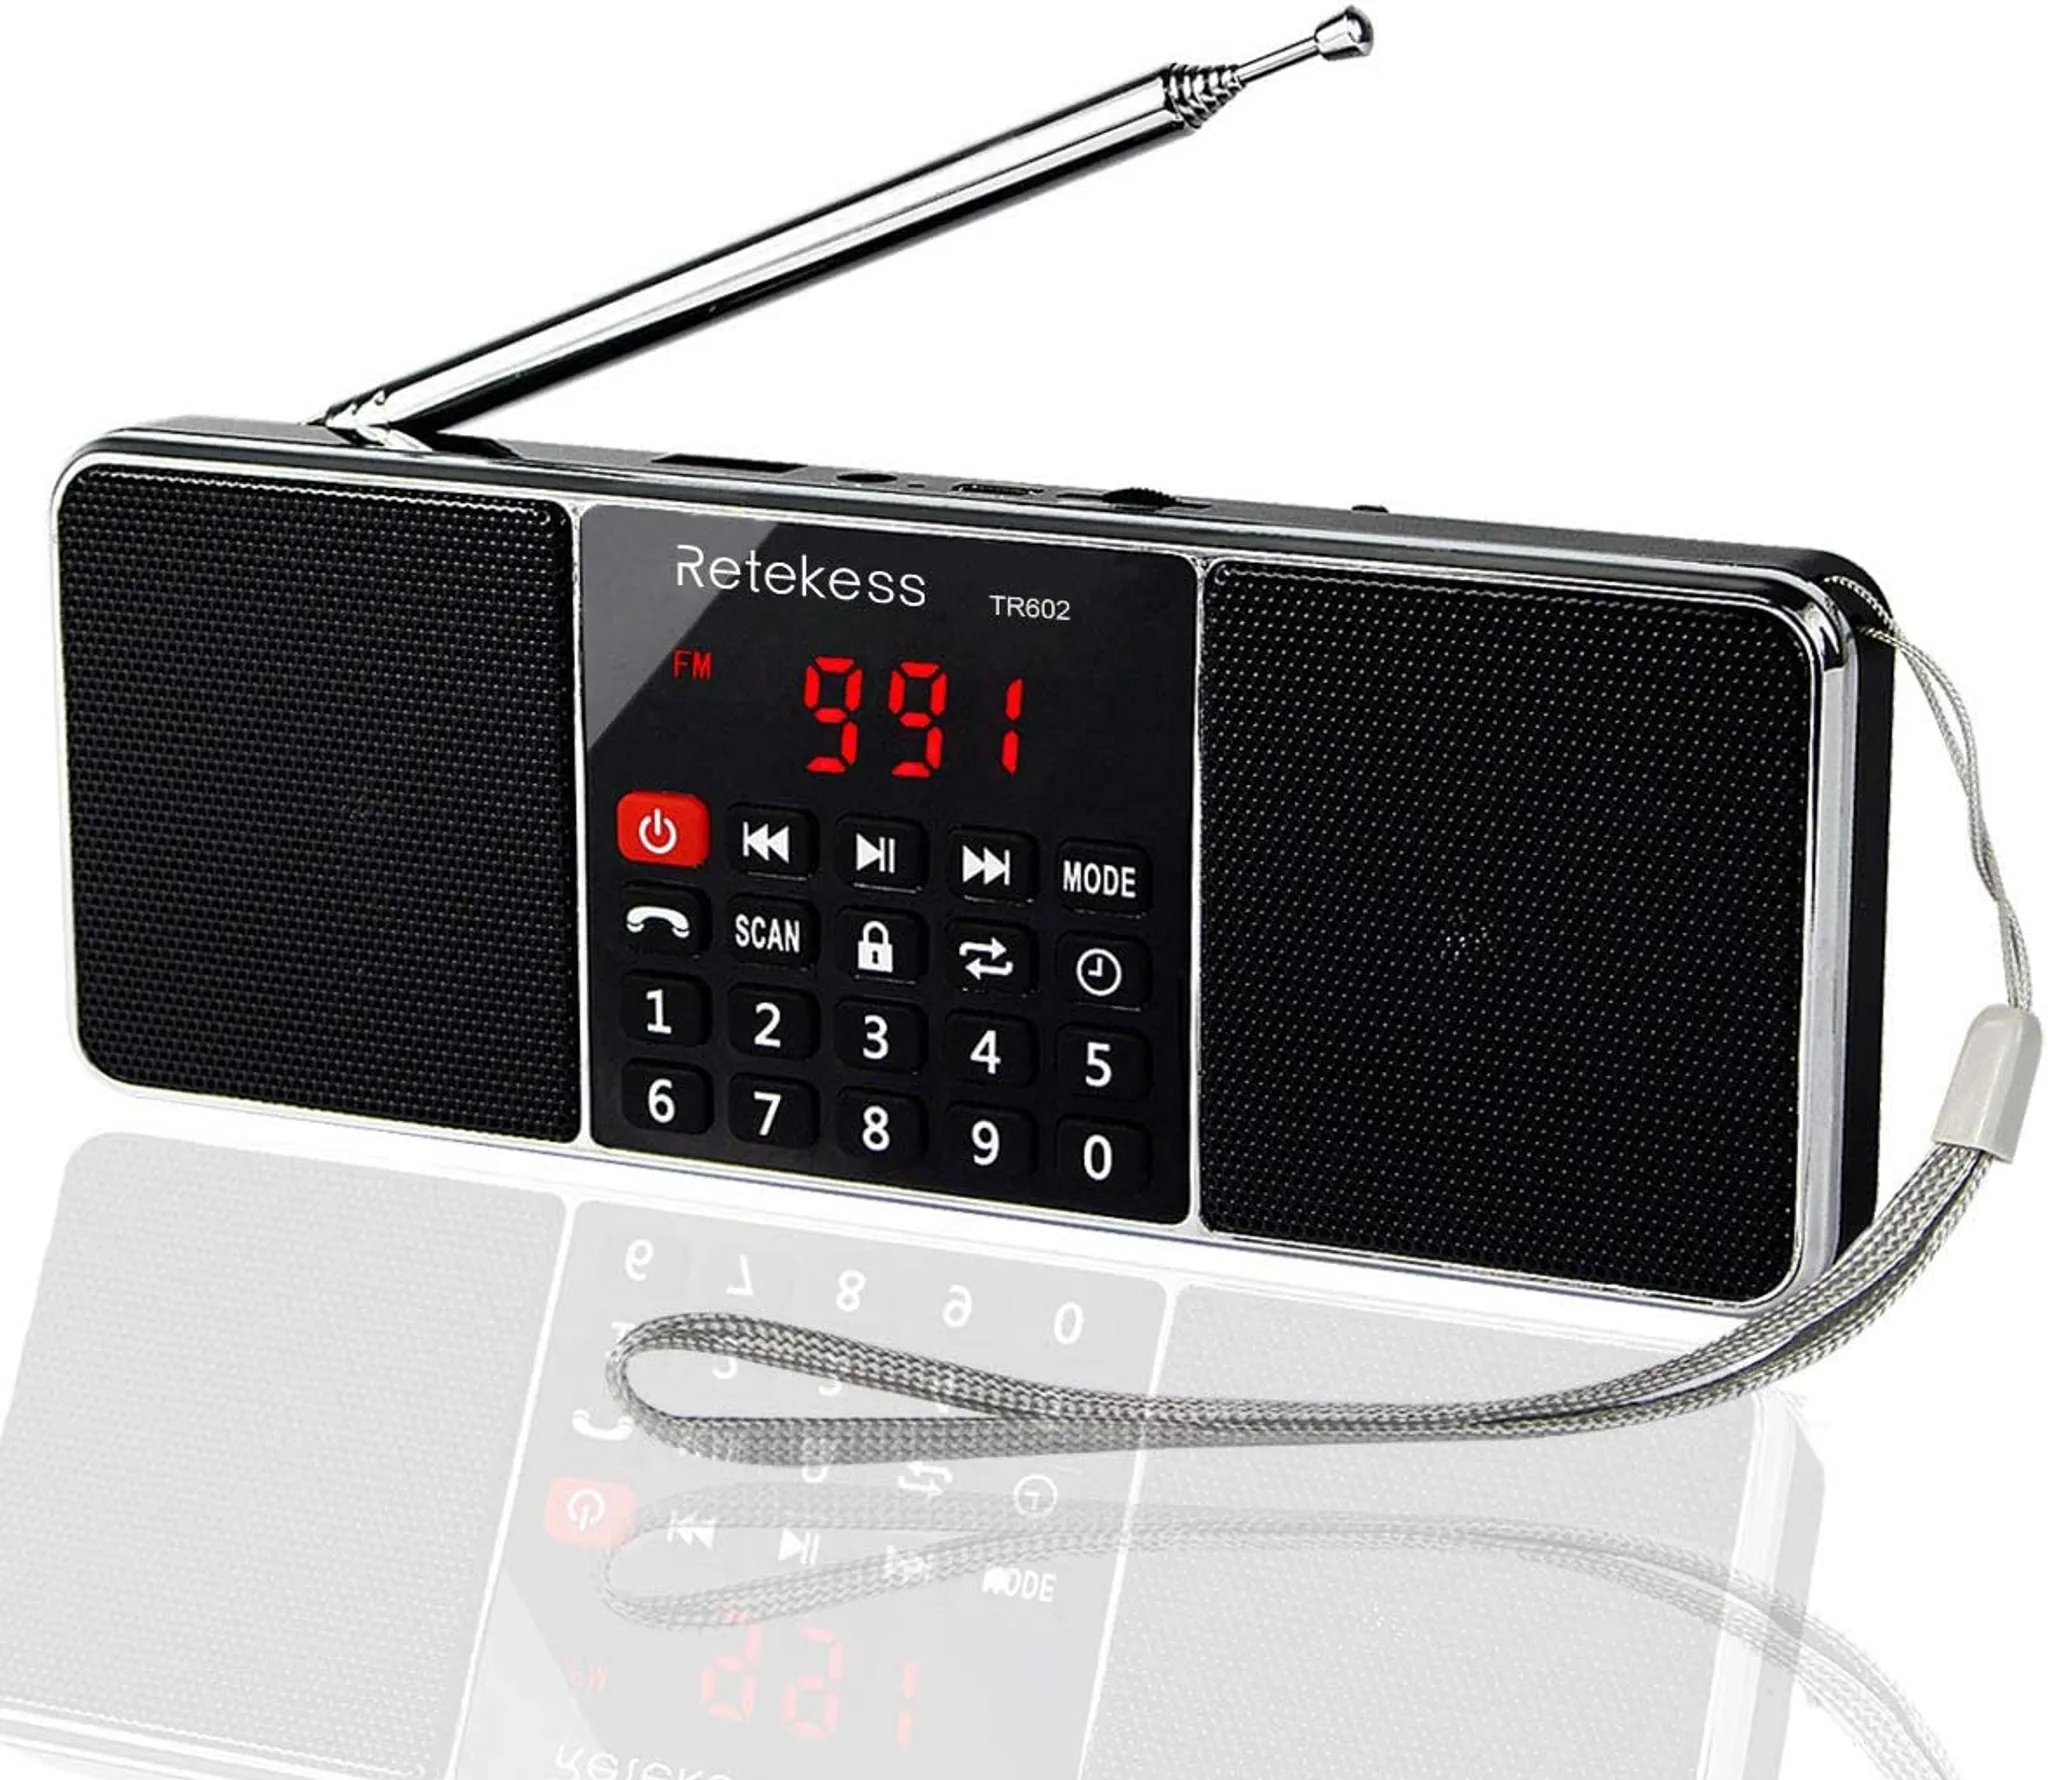 FM Radio TR602 Bluetooth, Am Retekess